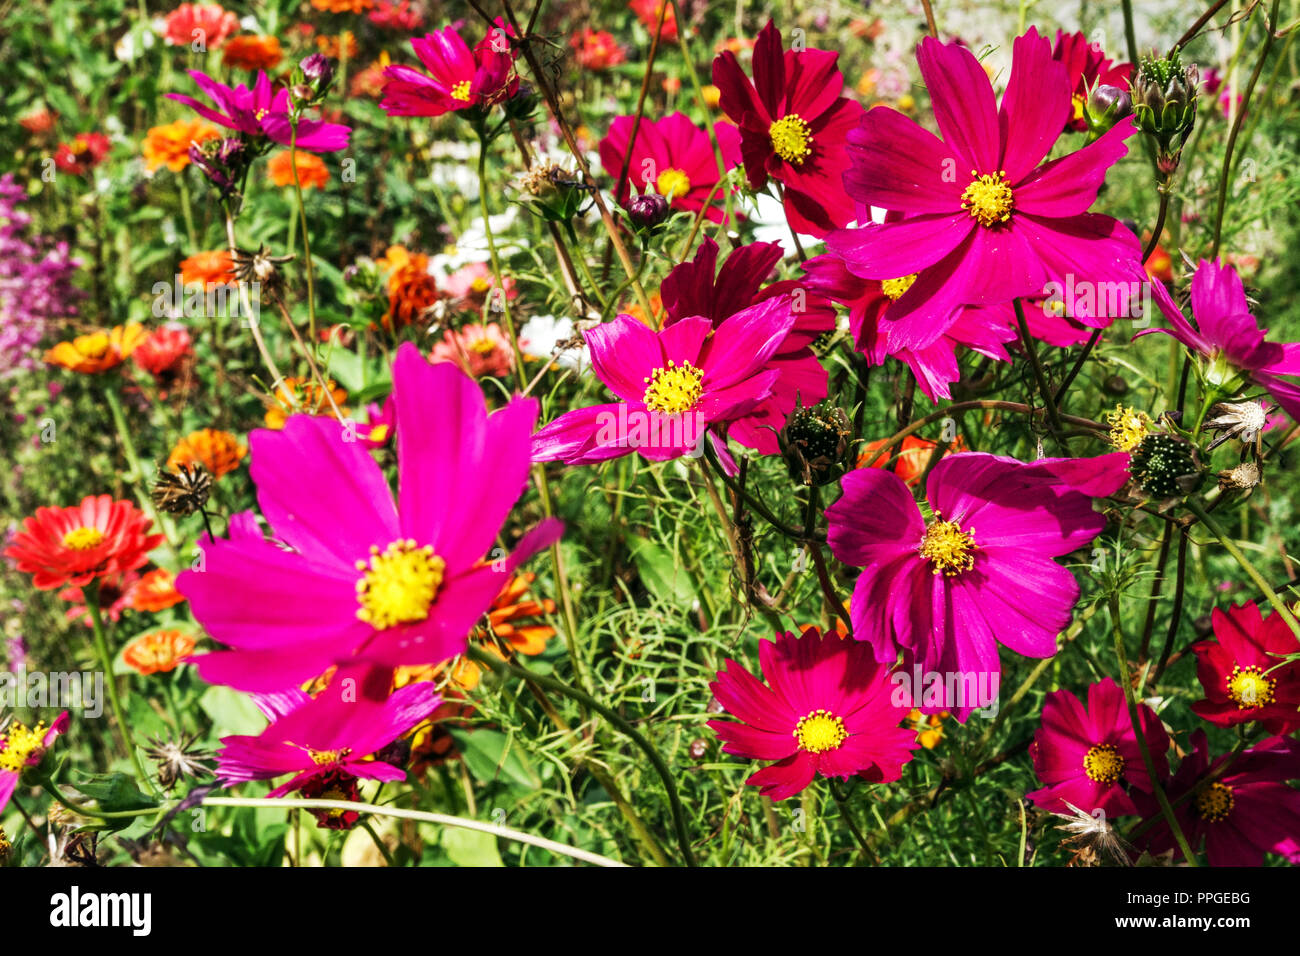 Annual flowerbed in late summer, Garden Cosmos bipinnatus Stock Photo